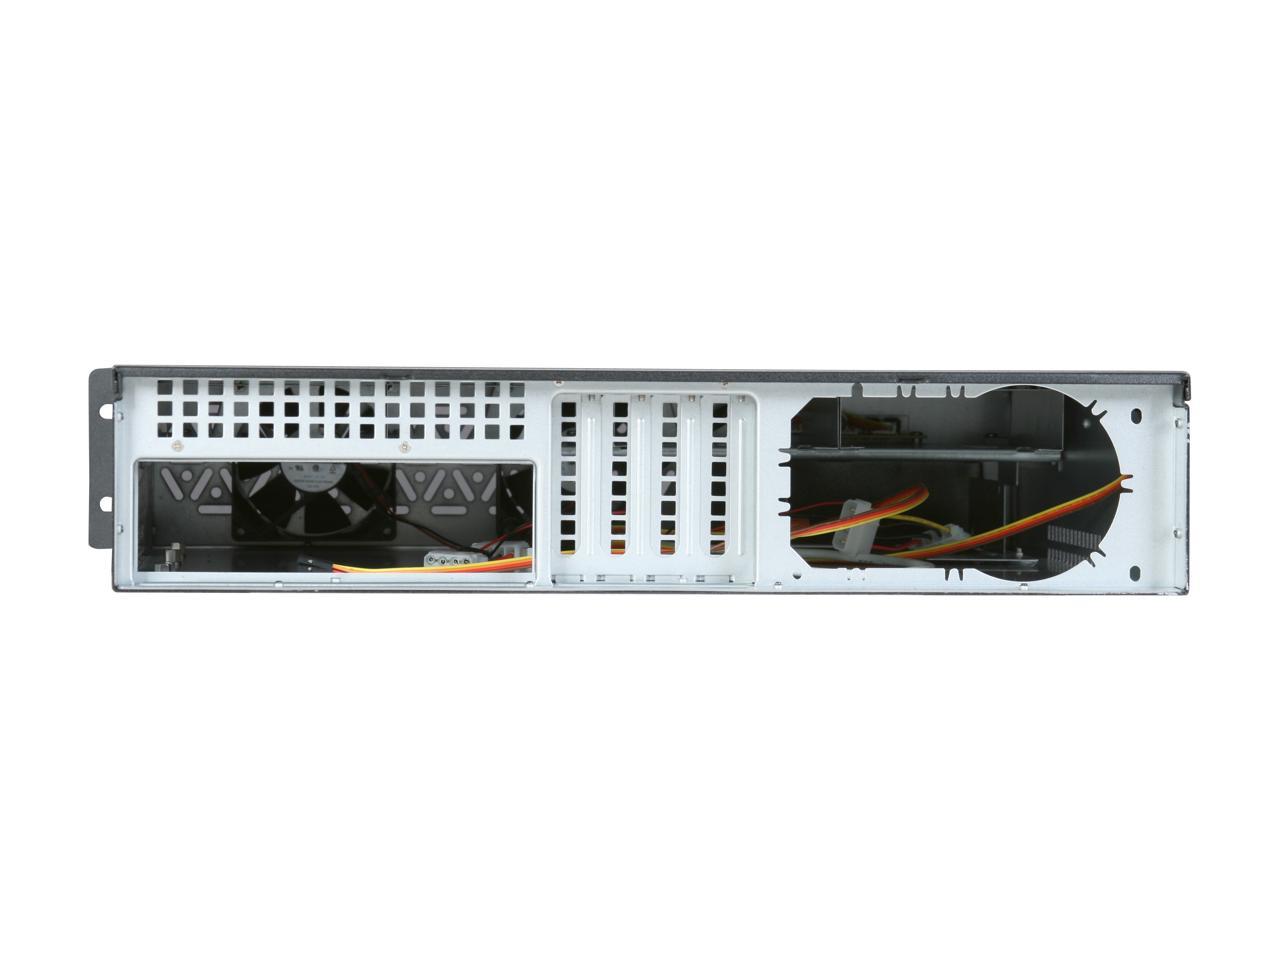 NORCO RPC-230 2U Rackmount Server Case 1 External 5.25" Drive Bays